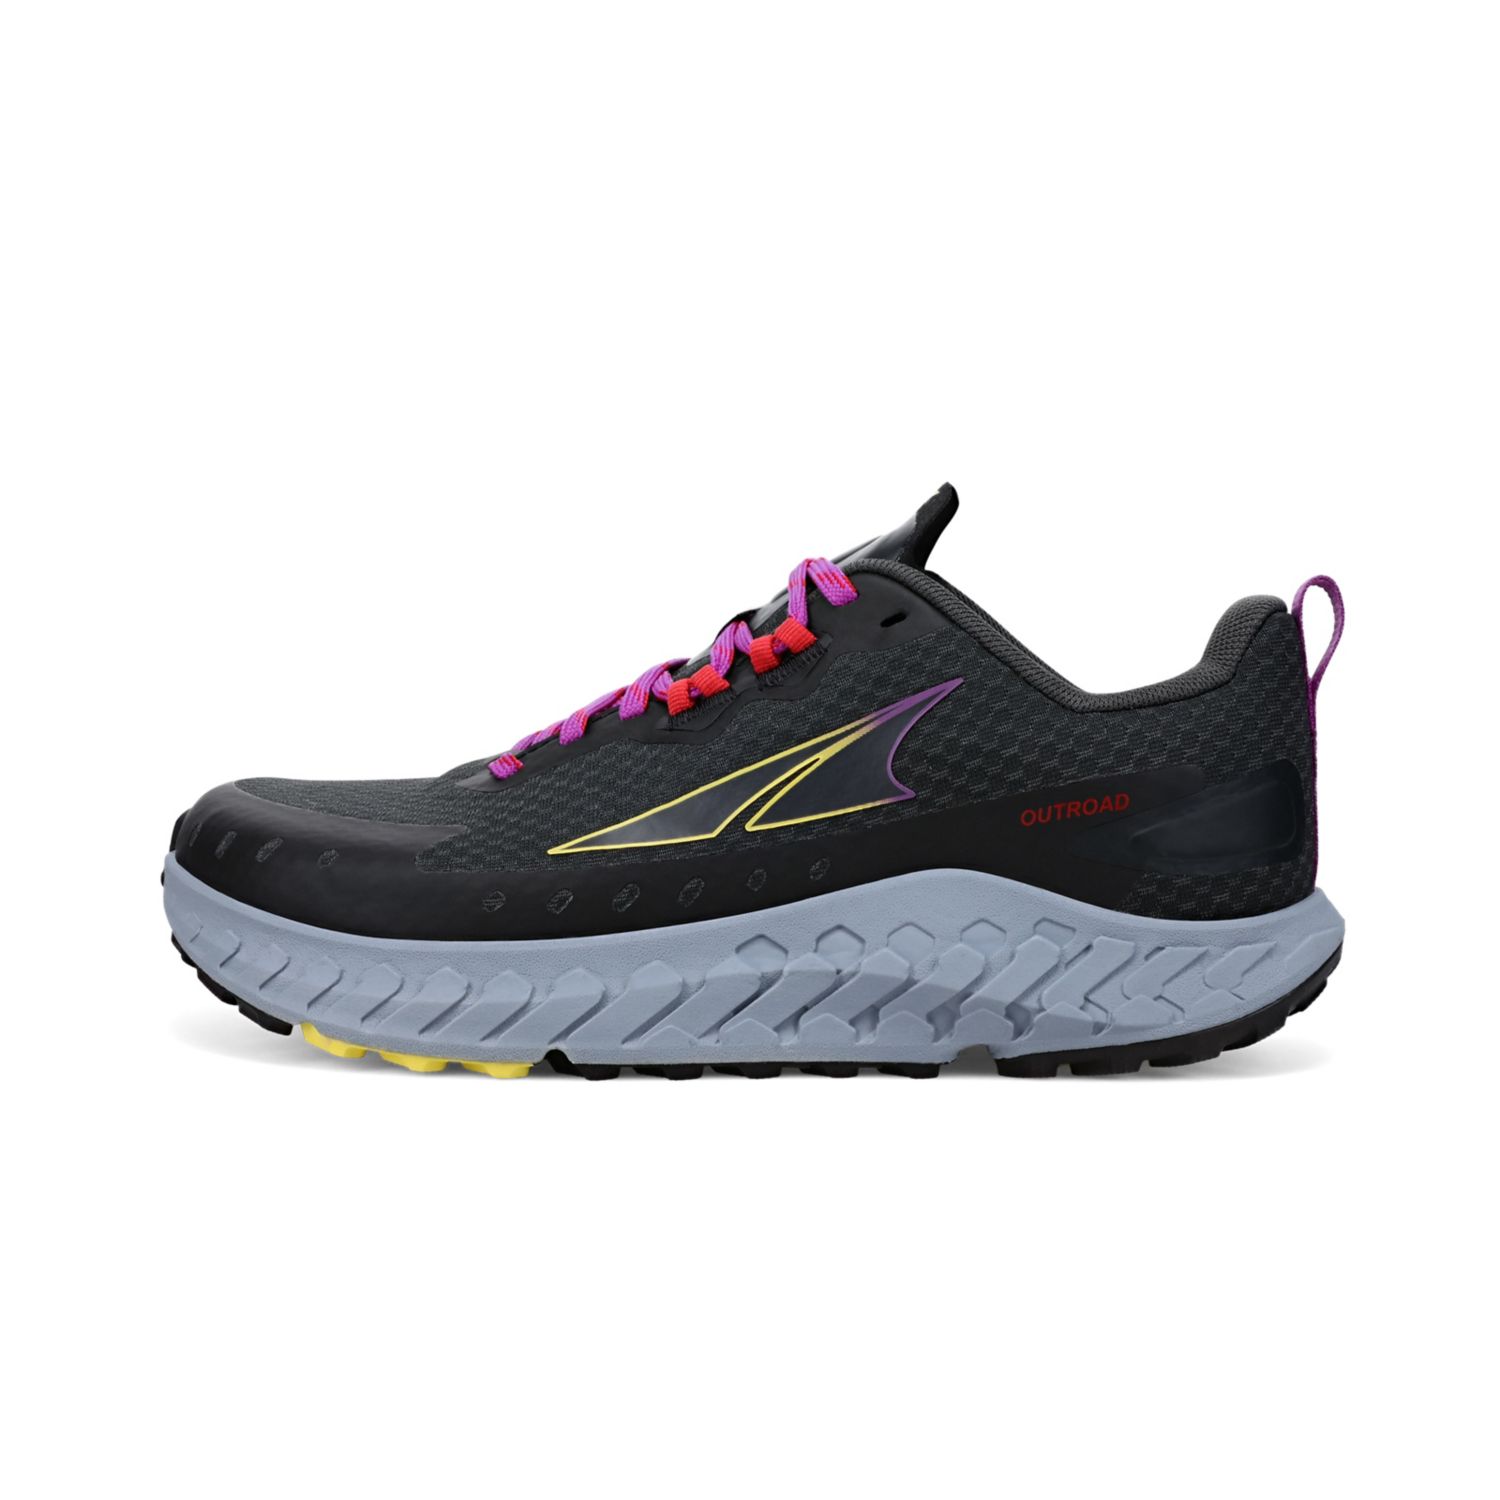 Dark Grey / Blue Altra Outroad Women's Trail Running Shoes | Ireland-86753929